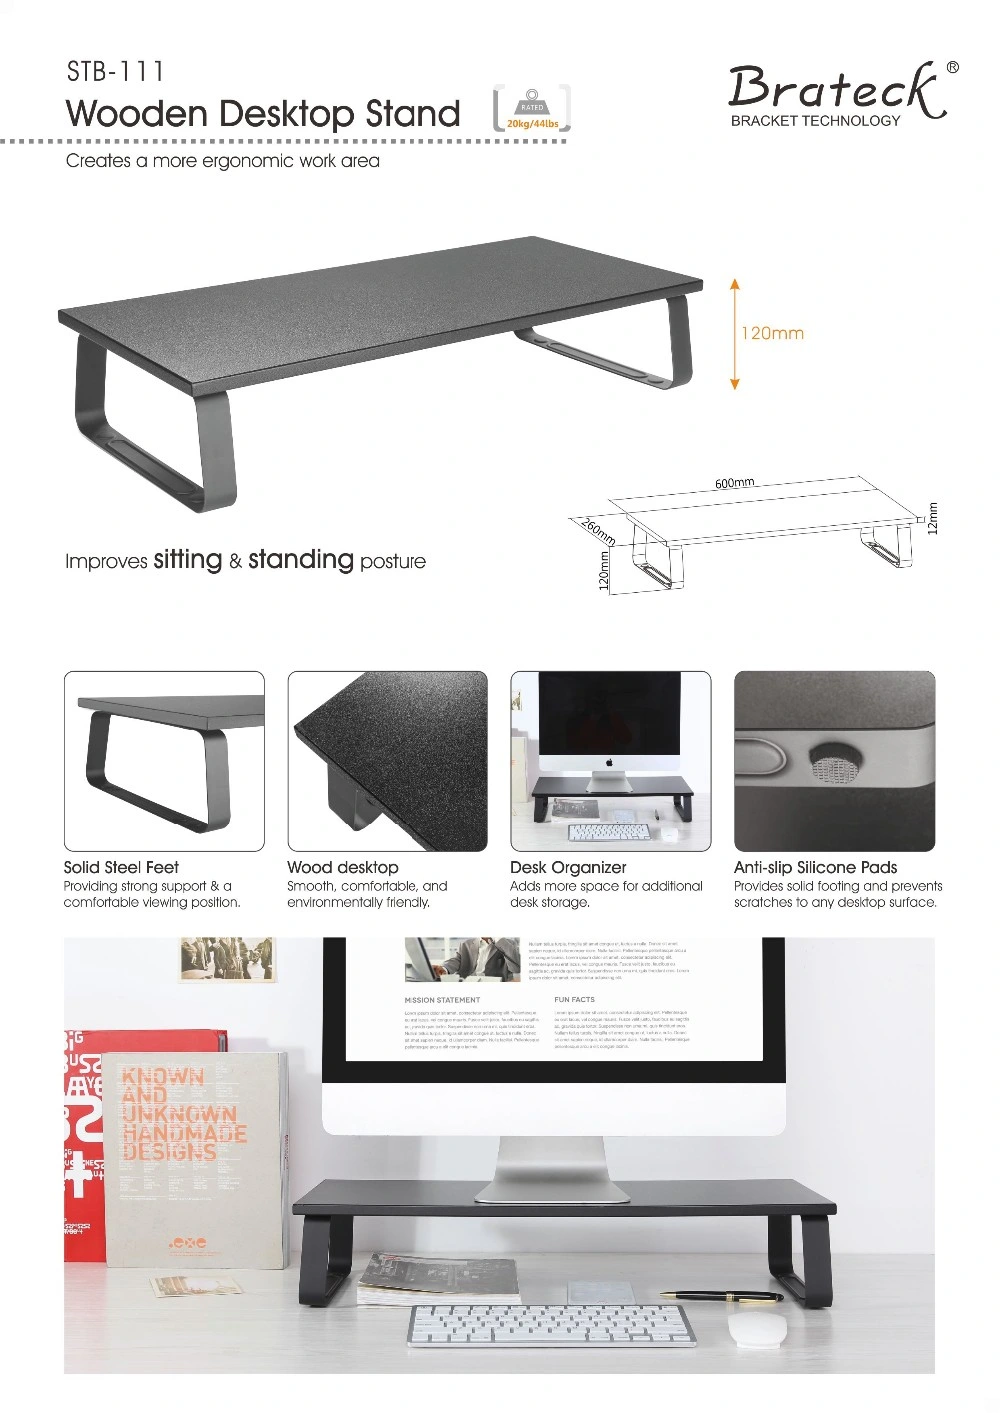 Adjustable Laptop Stand Space Saving Home Furniture Desktop Stand